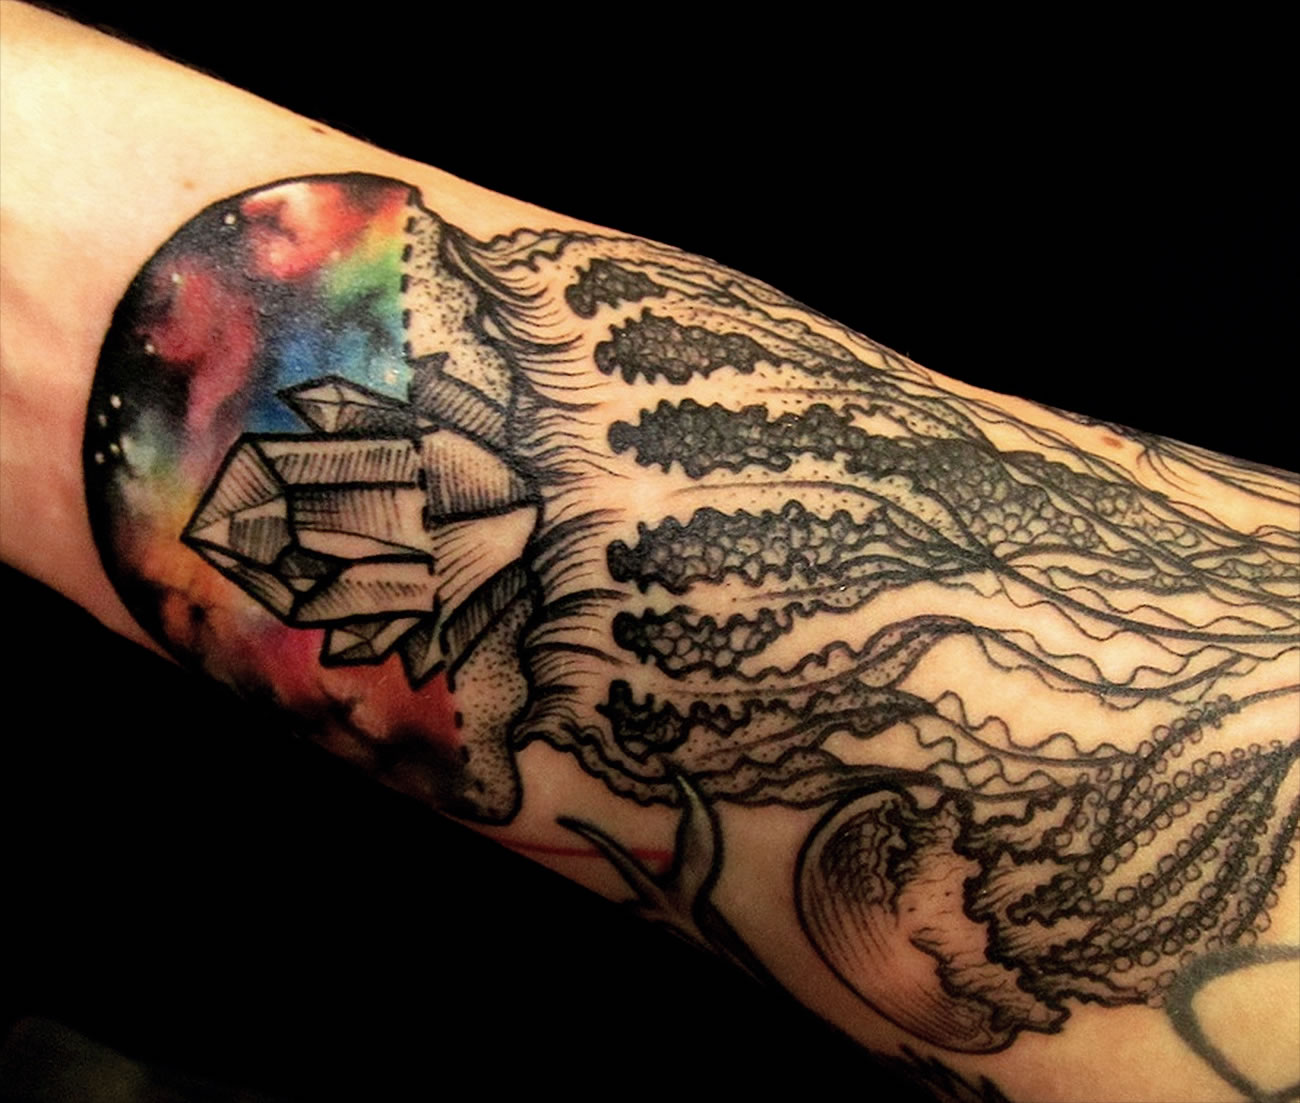 Cosmic Jellyfish tattoo by Nick Broslavskiy